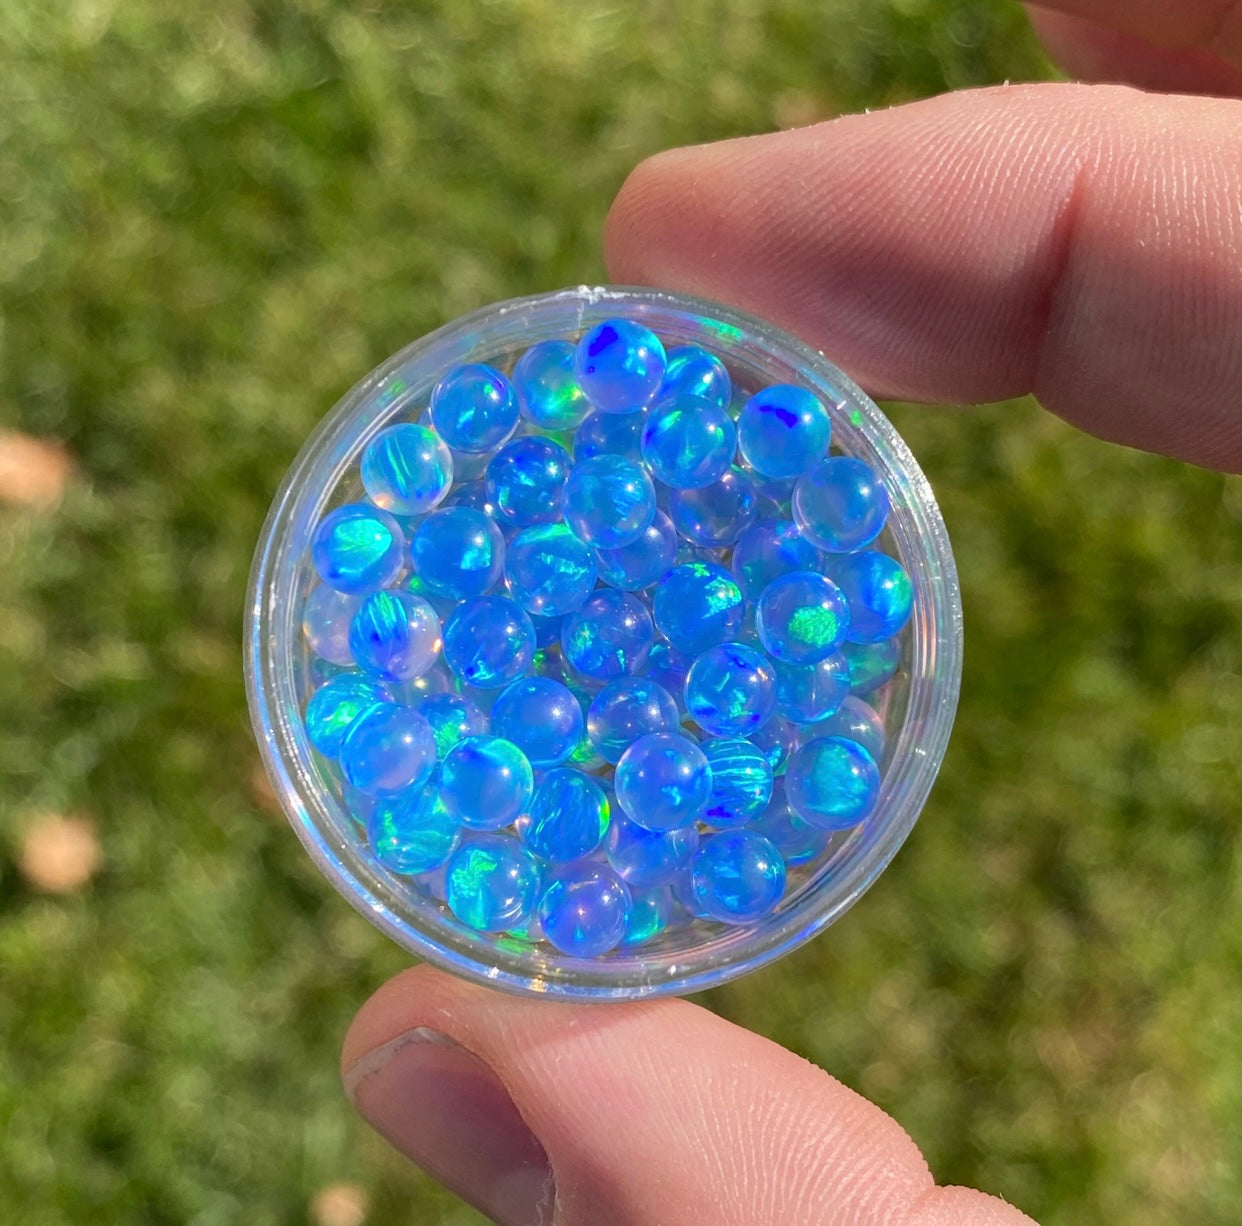 Ruby Pearl Co - Single 5mm Blue Opal Pearl